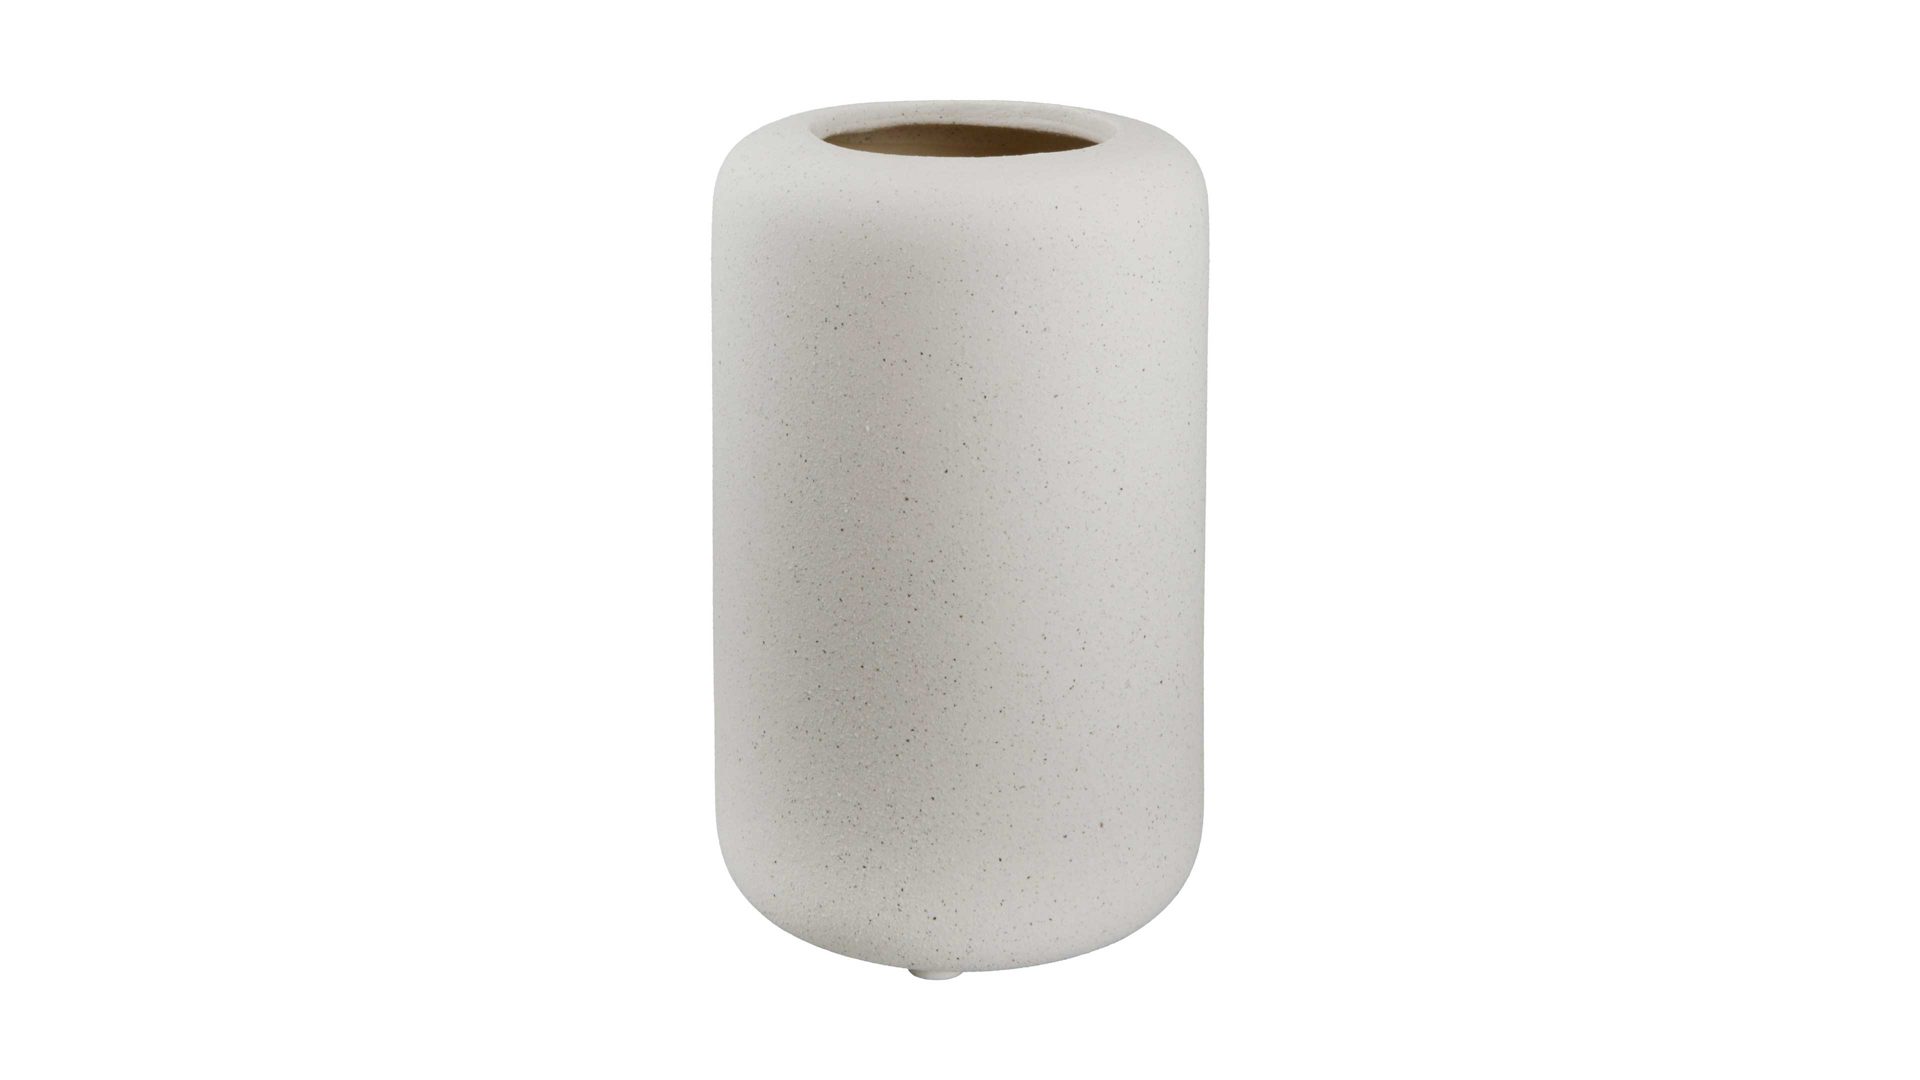 Vase Interliving BEST BUDDYS! aus Keramik in Weiß Interliving BEST BUDDYS! Vase Sabbia weiße Keramik - Höhe ca. 15 cm